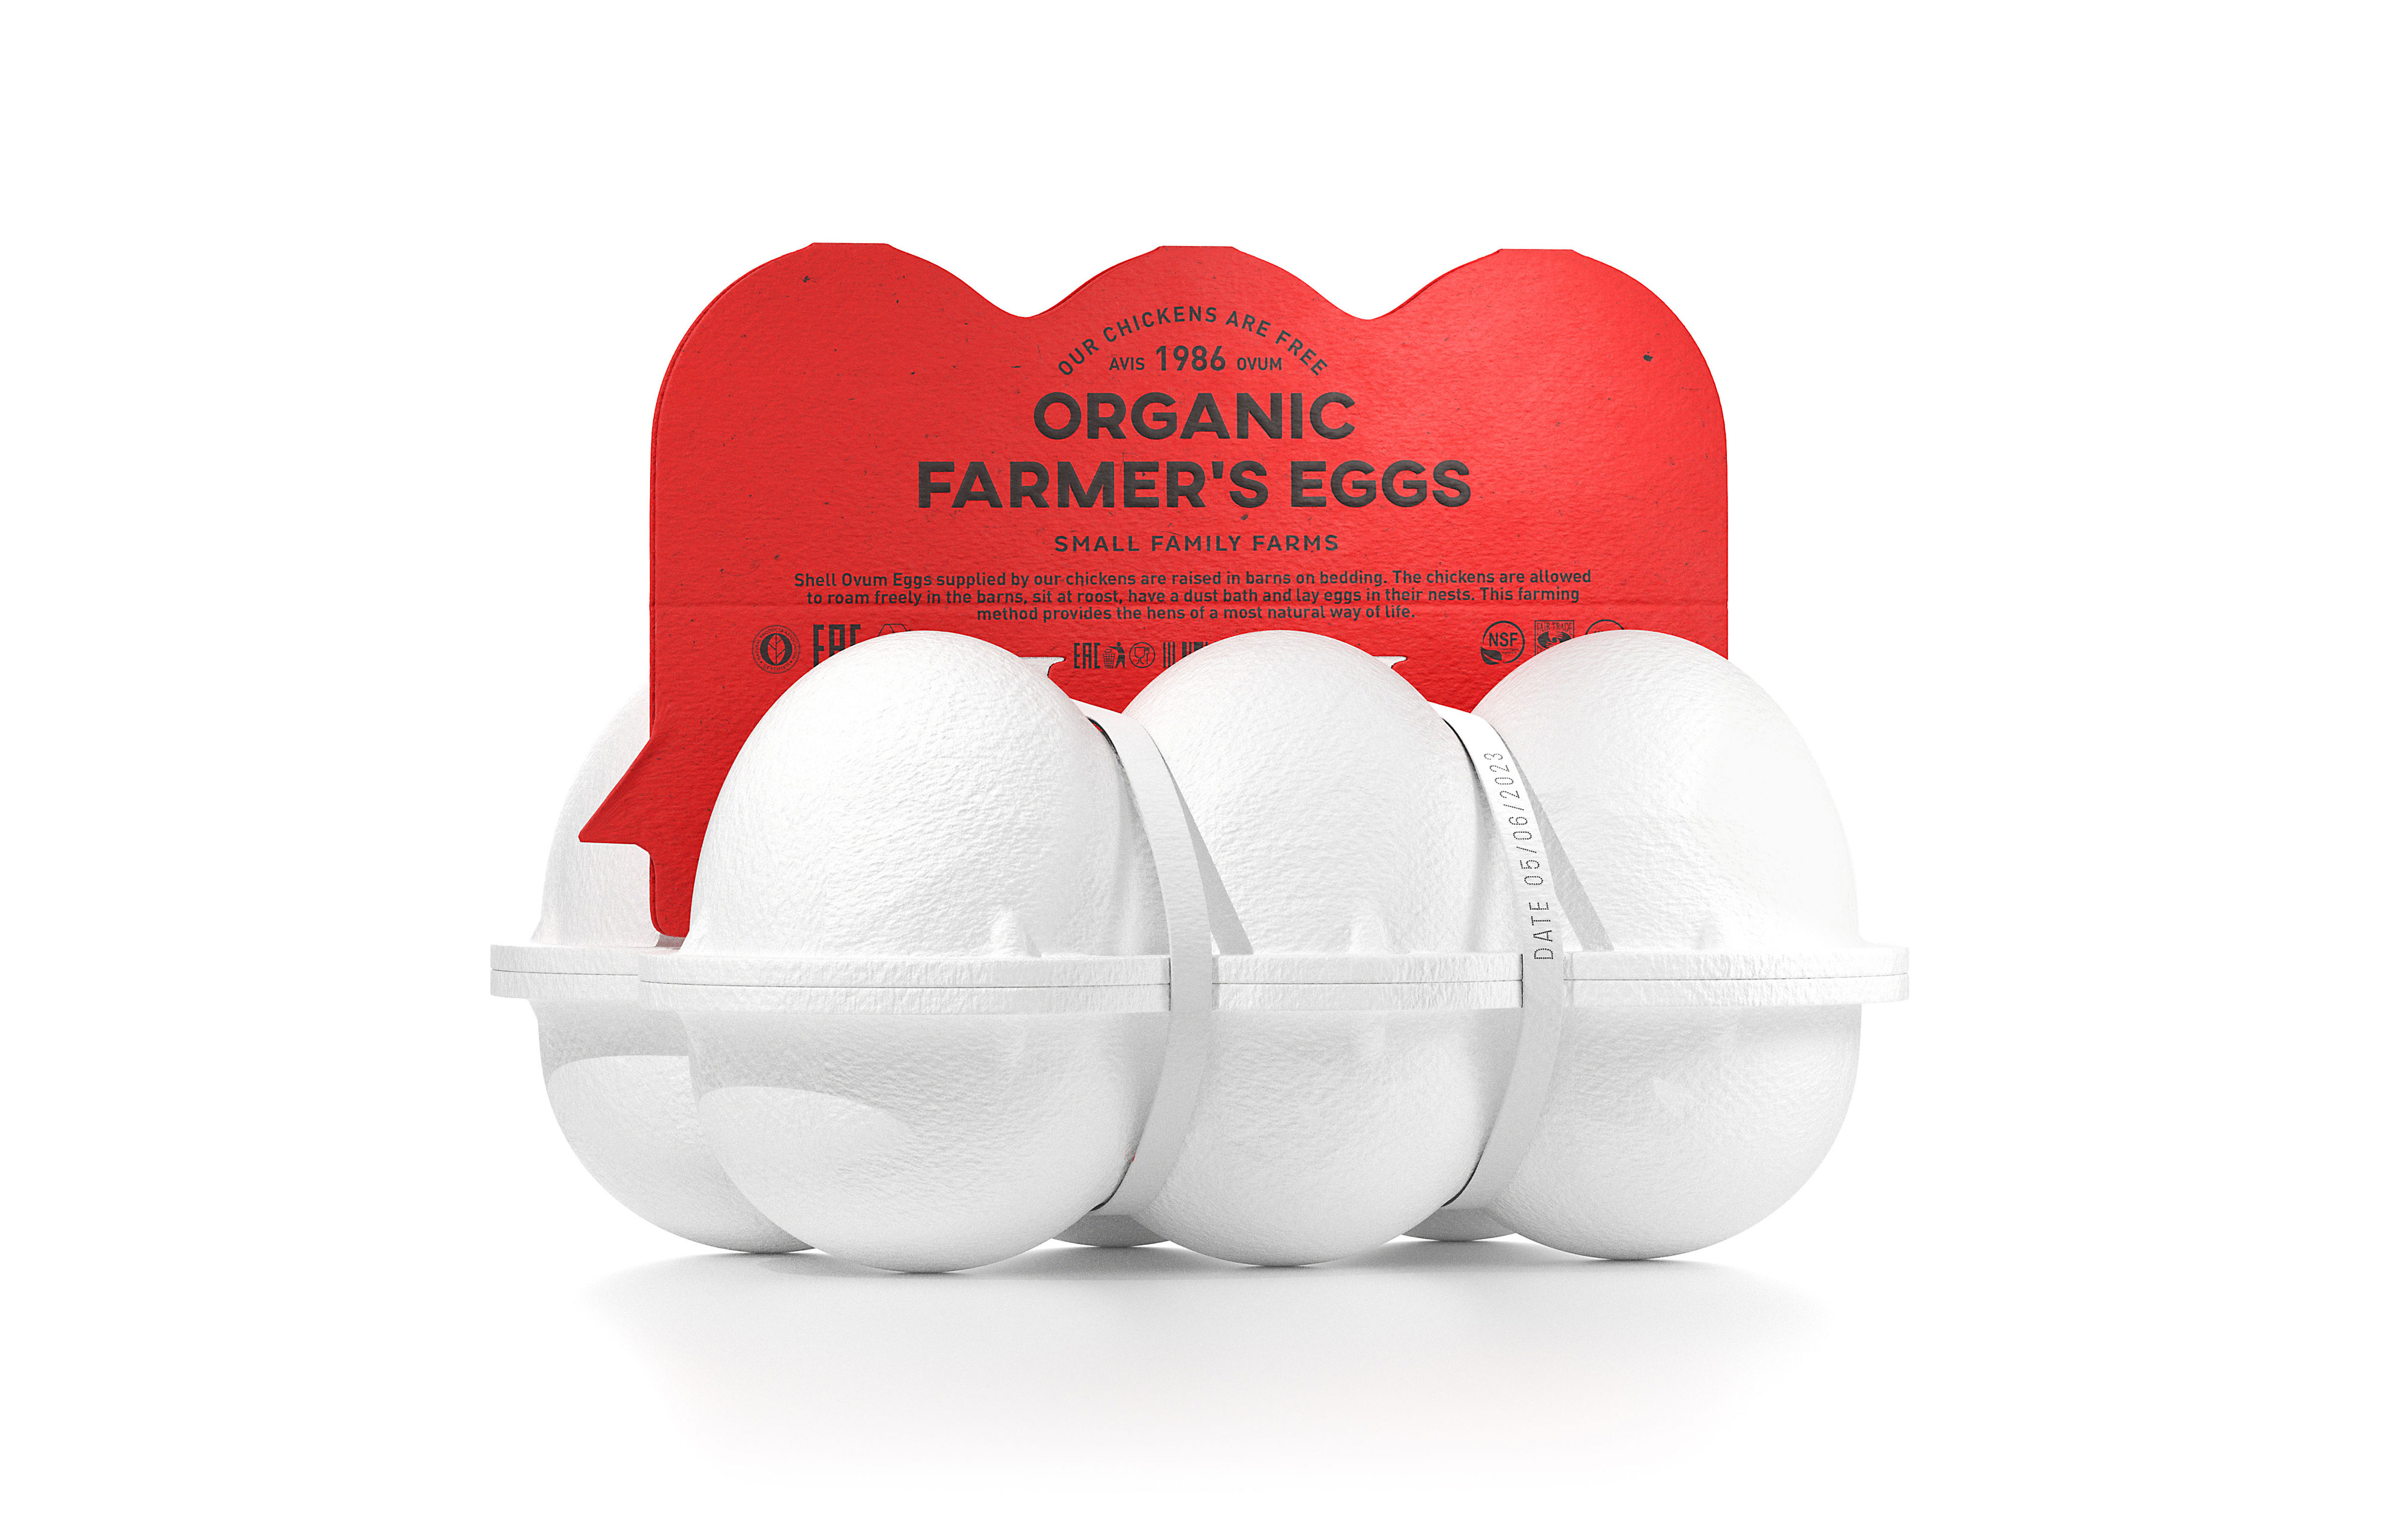 Organic Farmer’s Eggs Packaging